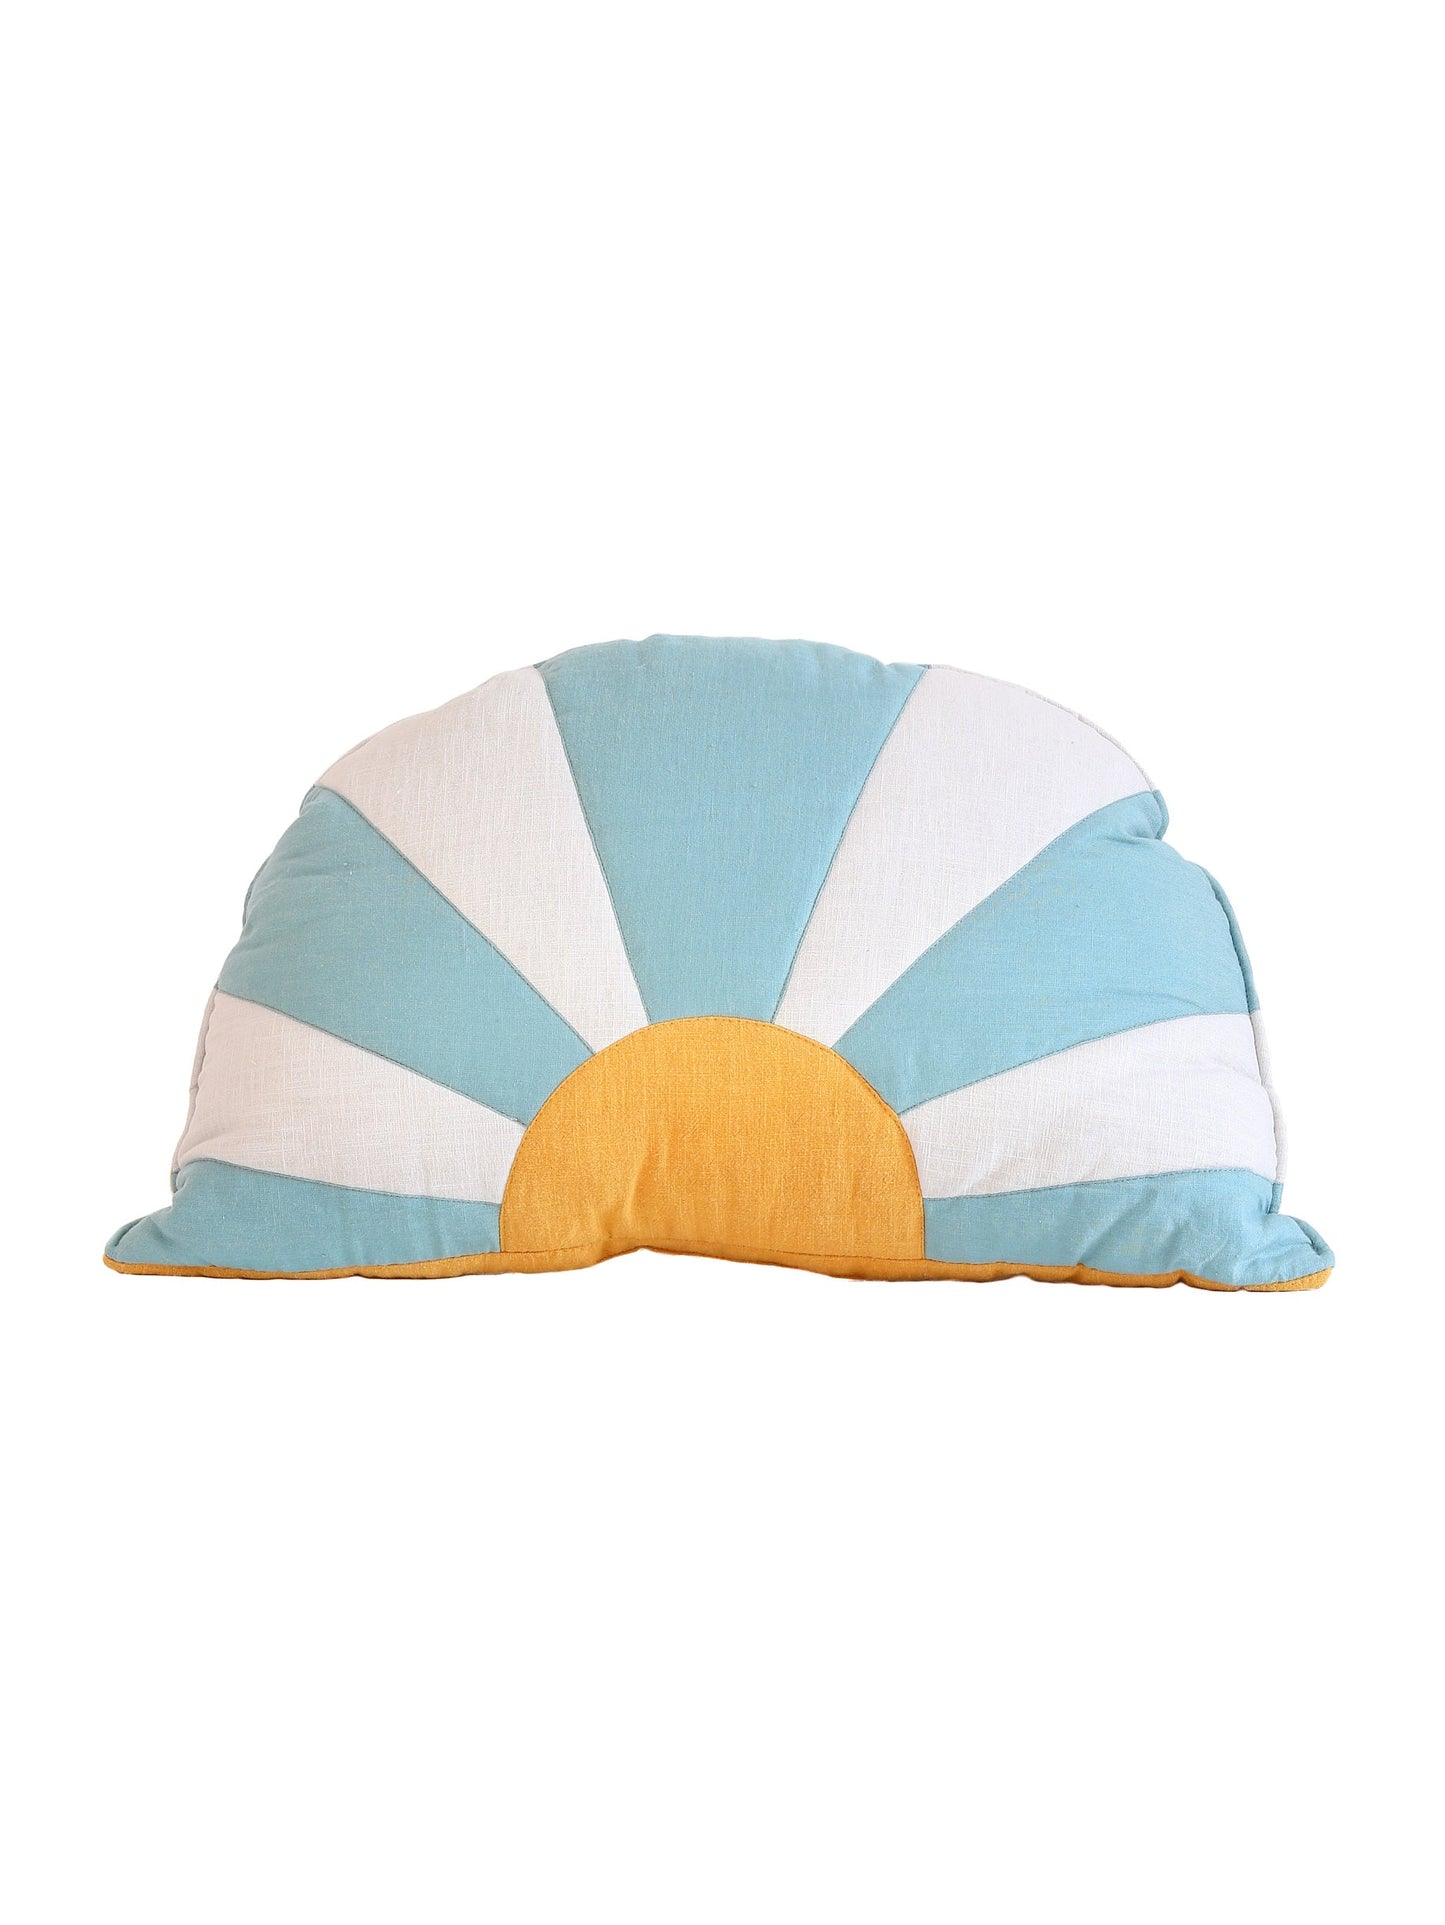 “Sunset in Twin Peaks” Sun Pillow